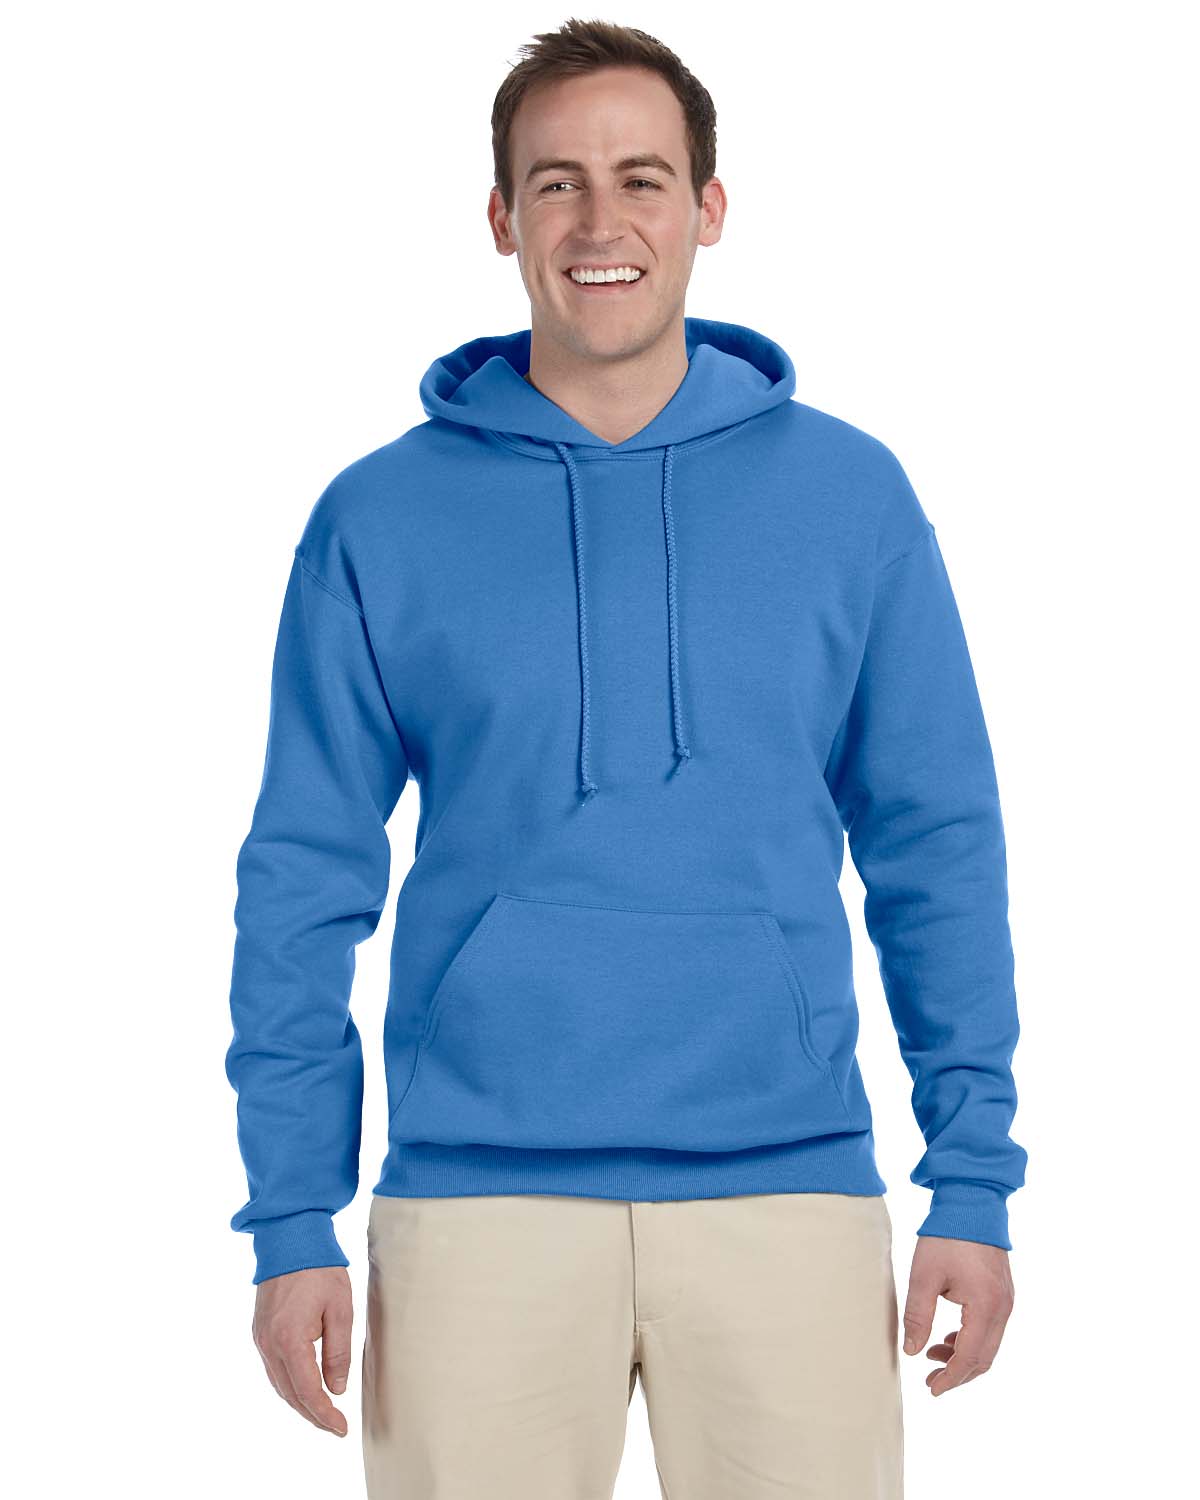 Vintage Heather Blue, Jerzees Mens Adult Pullover Hooded Sweatshirt